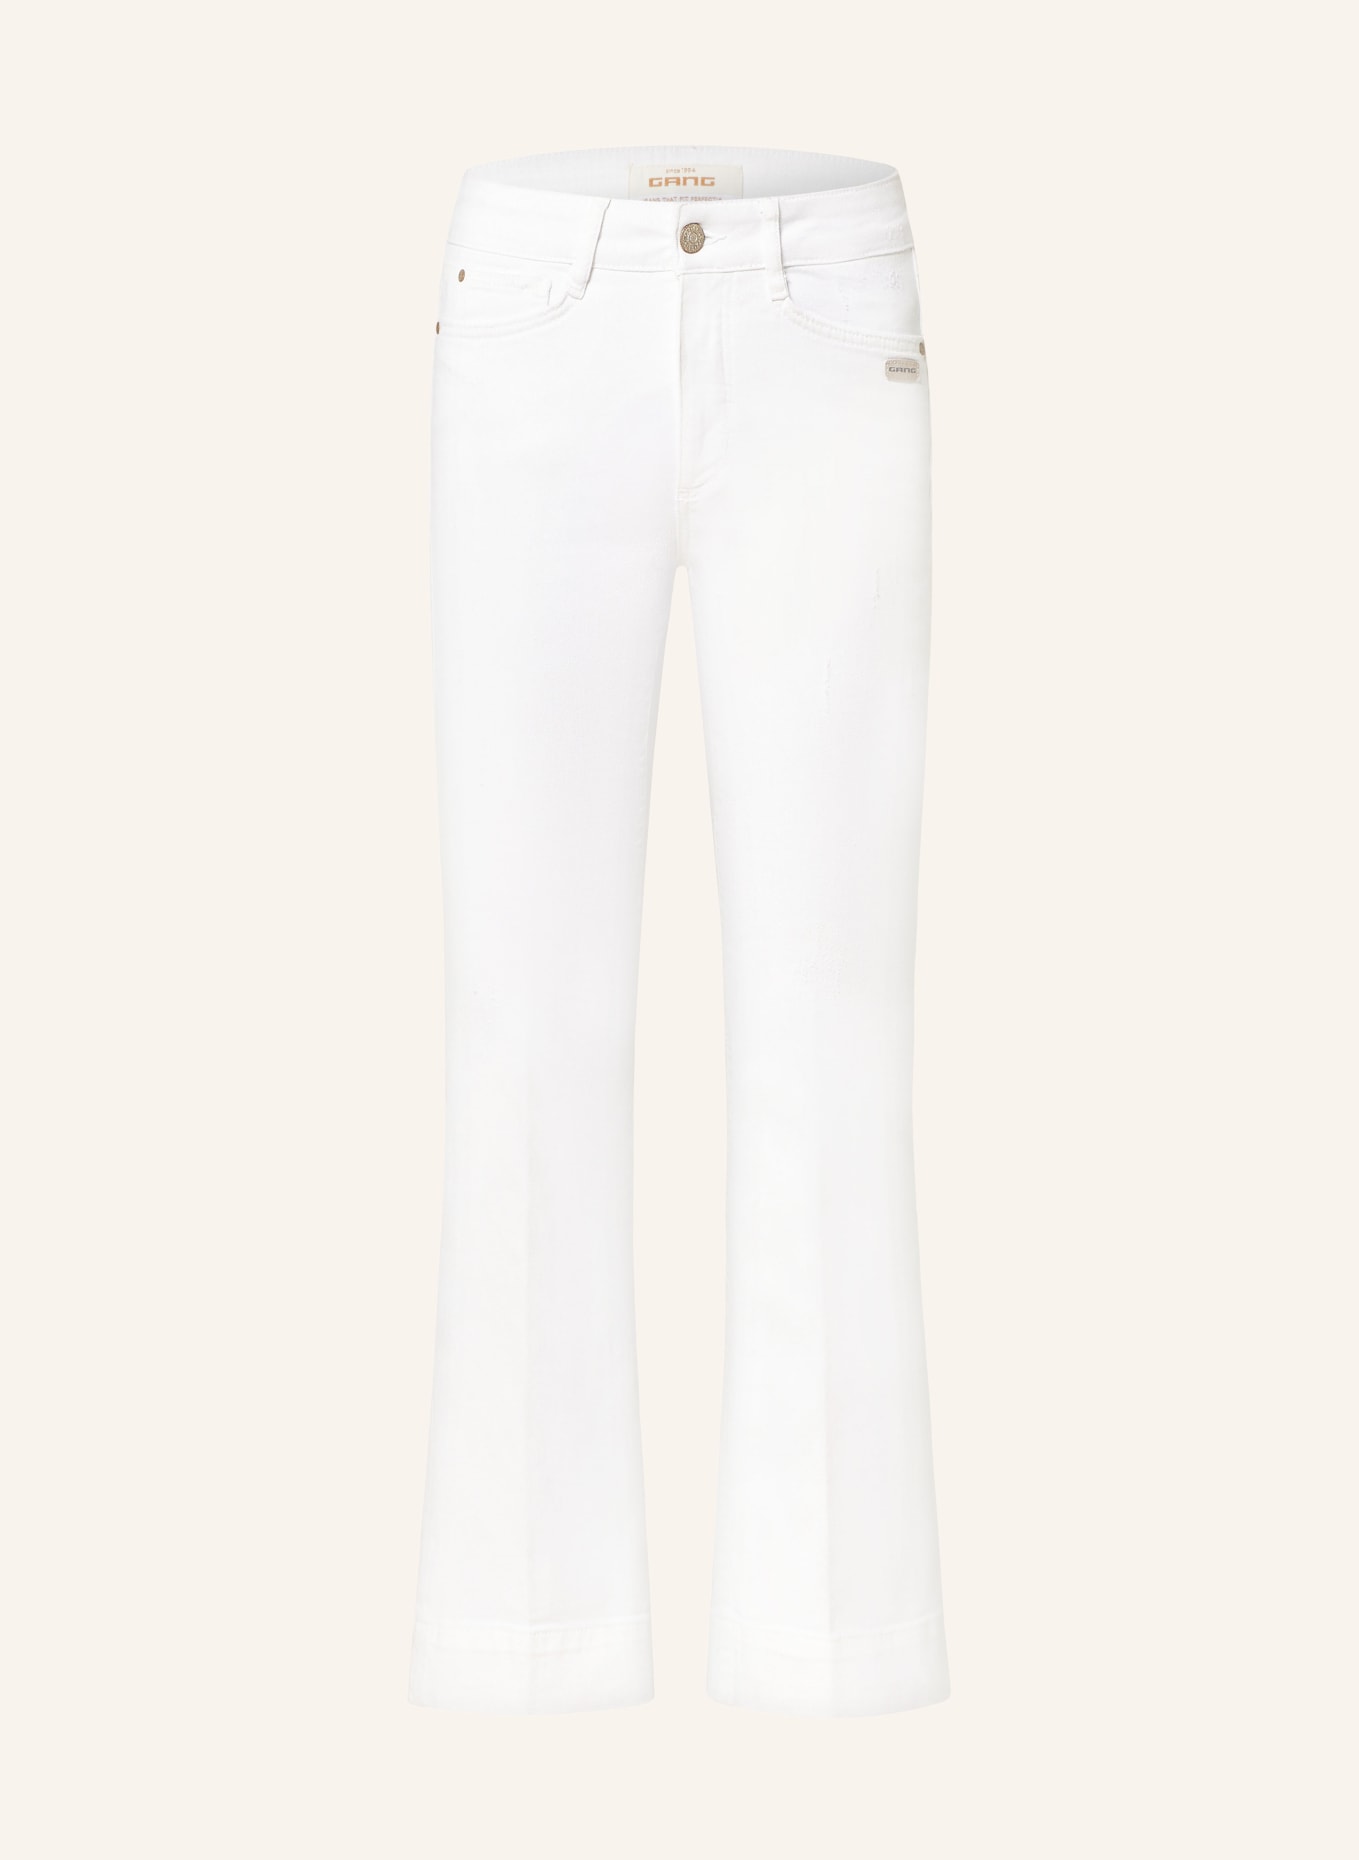 GANG Flared Jeans MAXIMA, Farbe: 7020 white used (Bild 1)